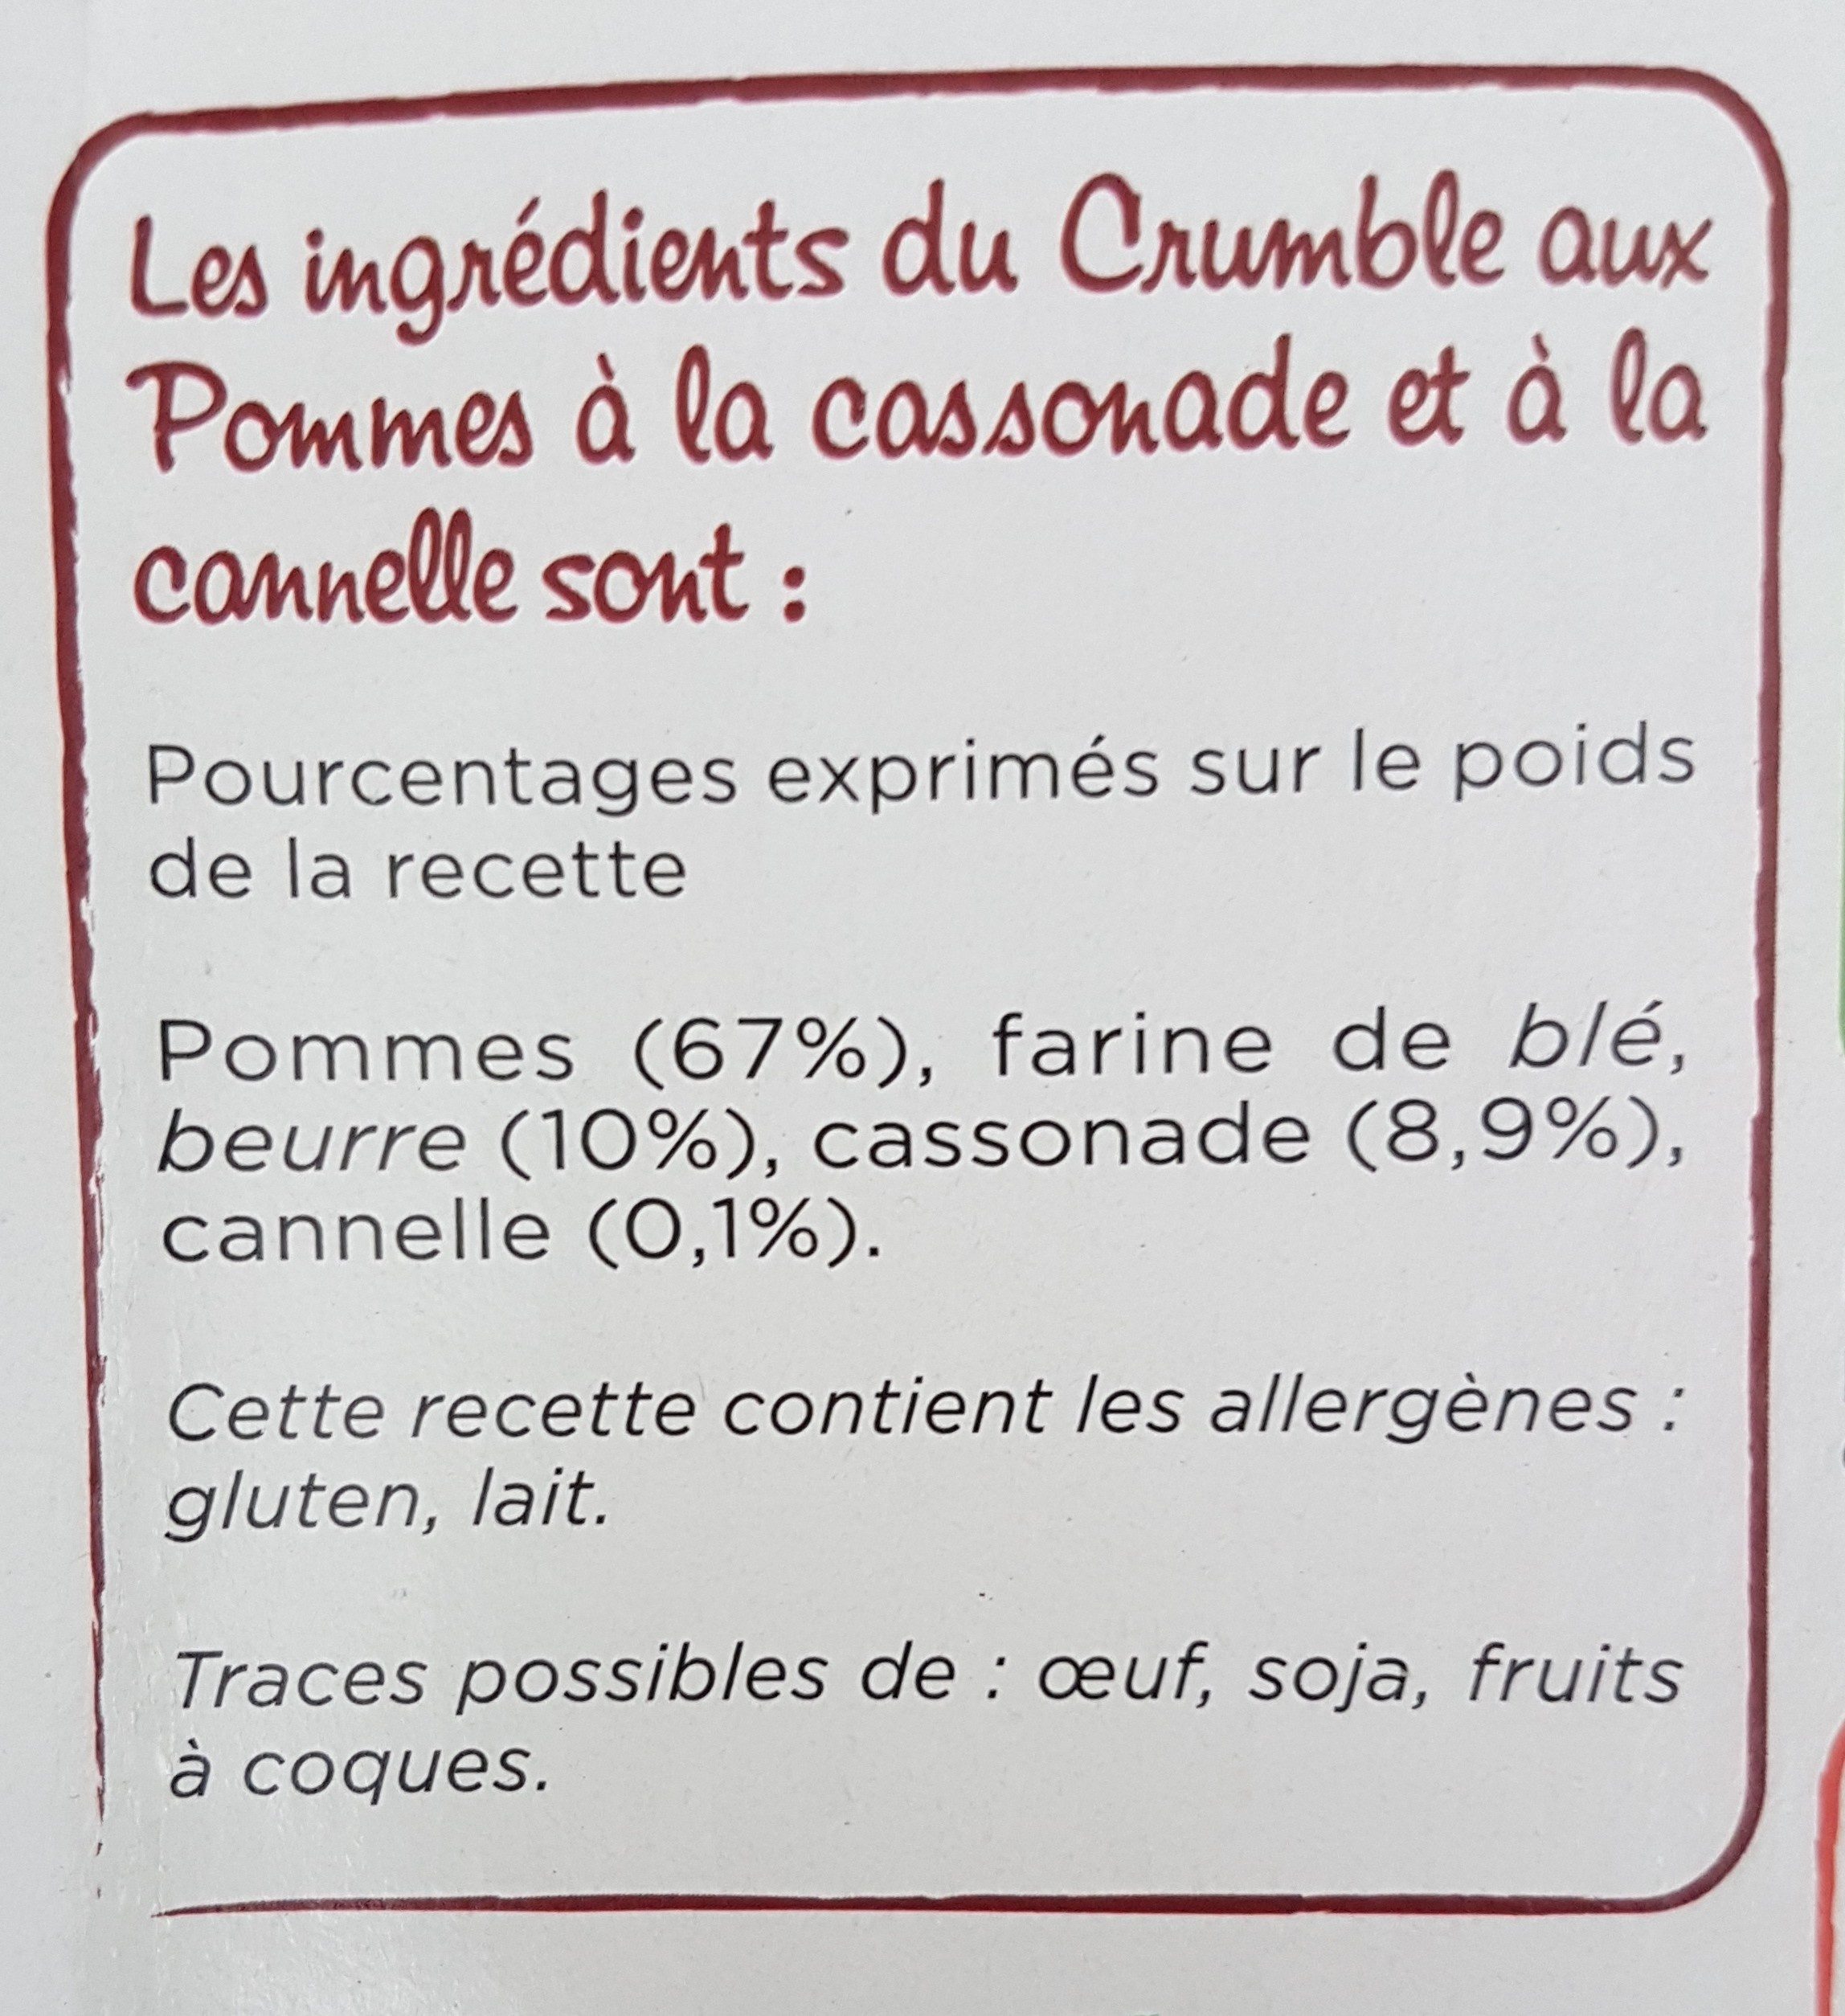 Crumble aux pommes - Ingrediënten - fr